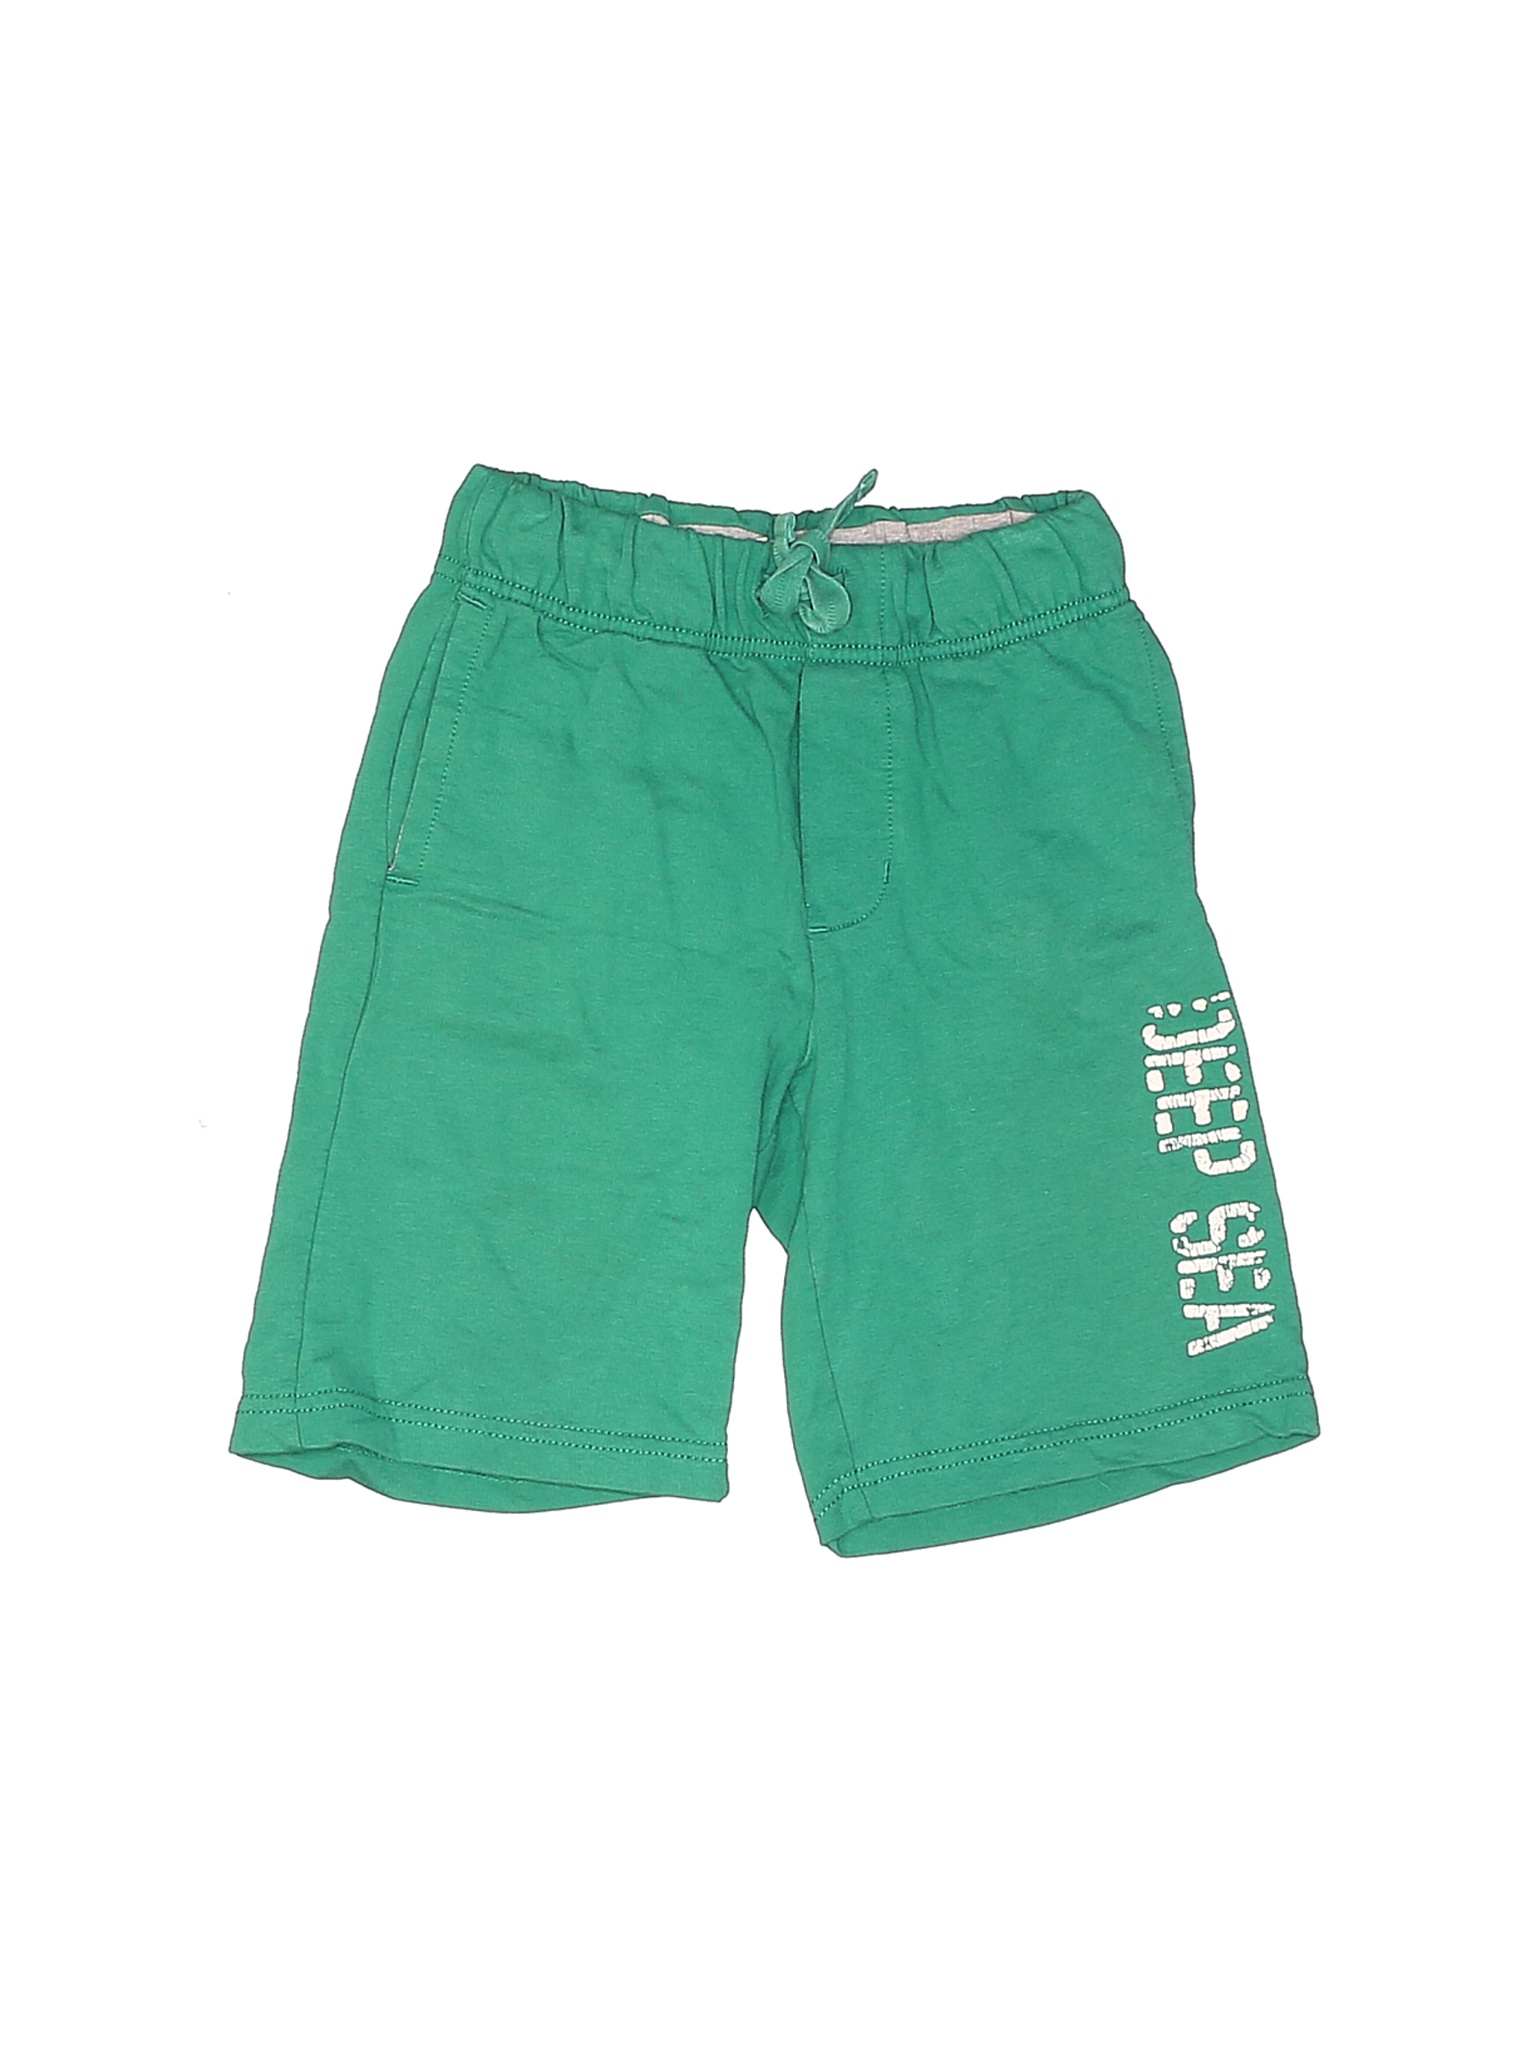 Gymboree Boys Green Shorts 5 | eBay